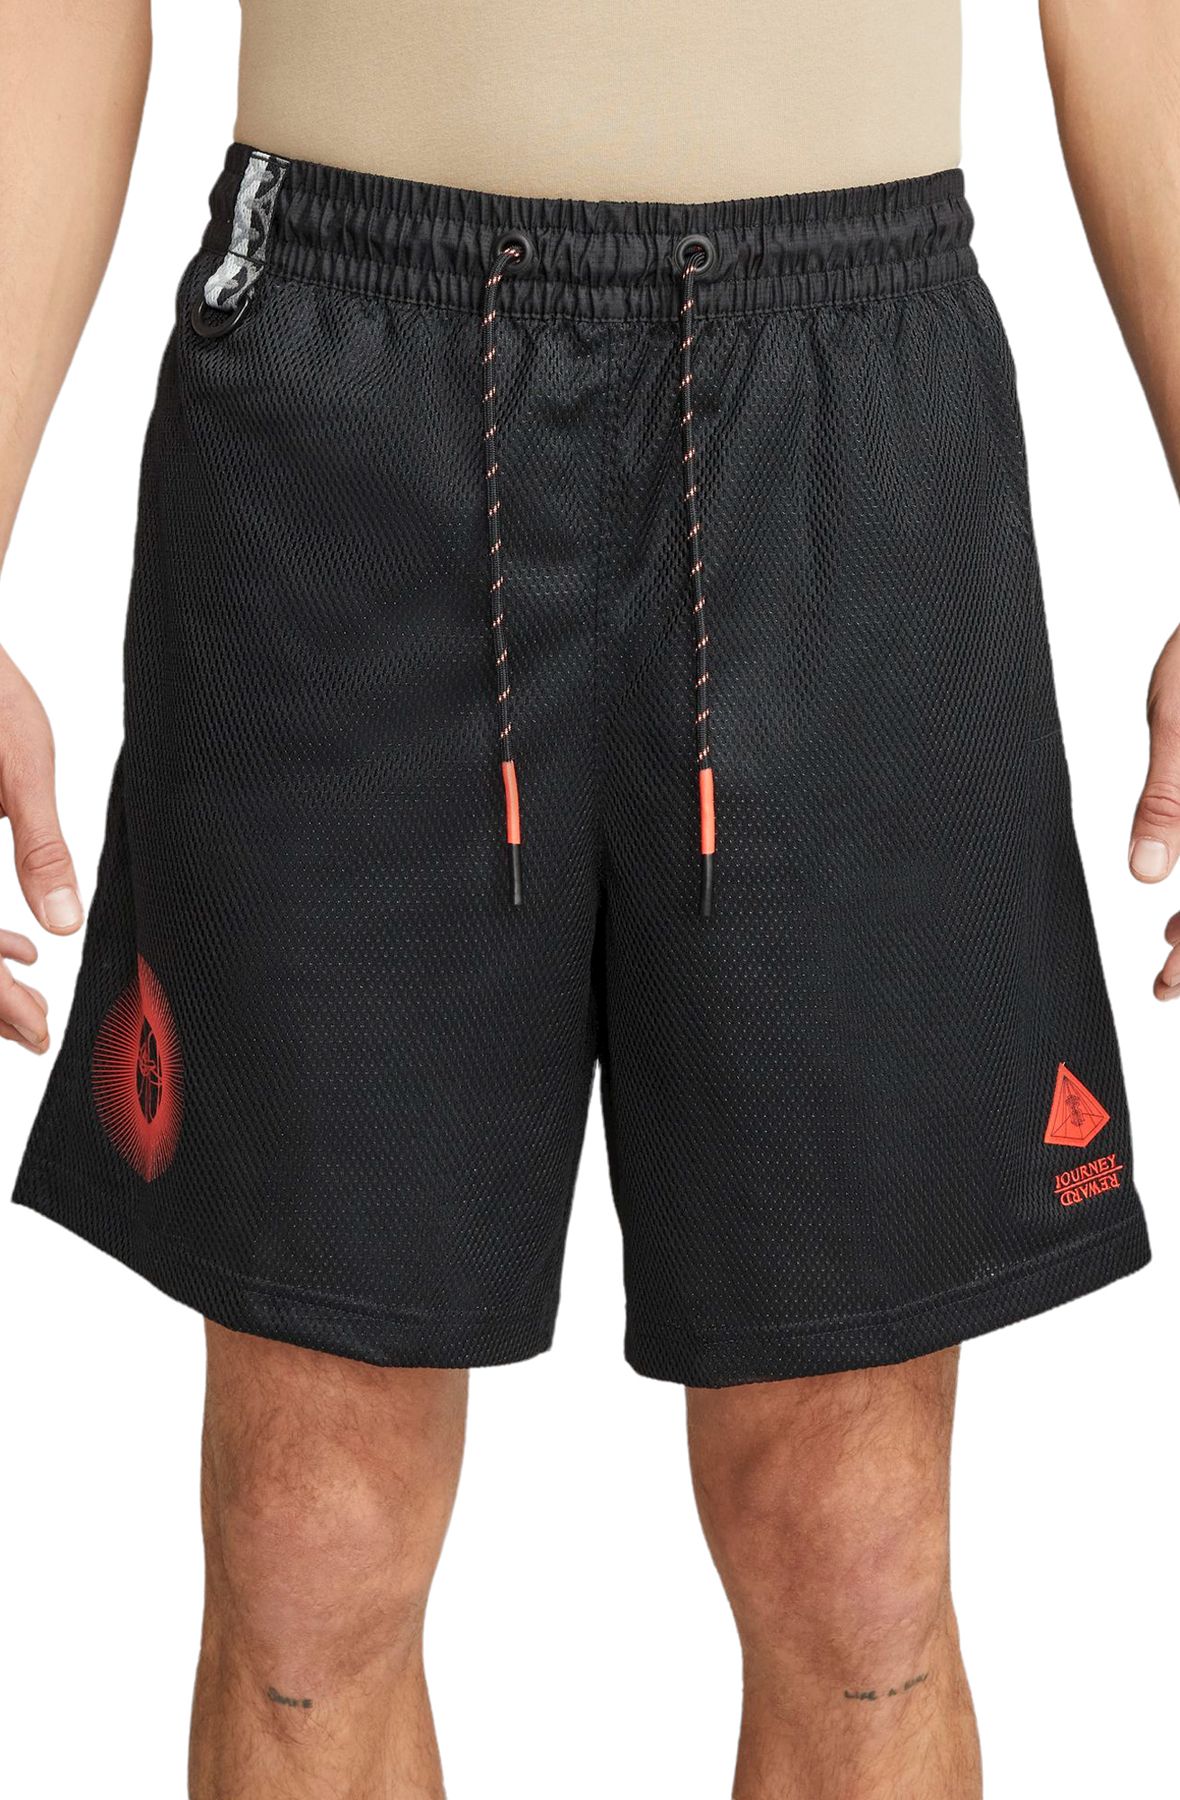 Brooklyn Nets Black Summer Team Shorts Thin Breathable Basketball Shorts  M-XL